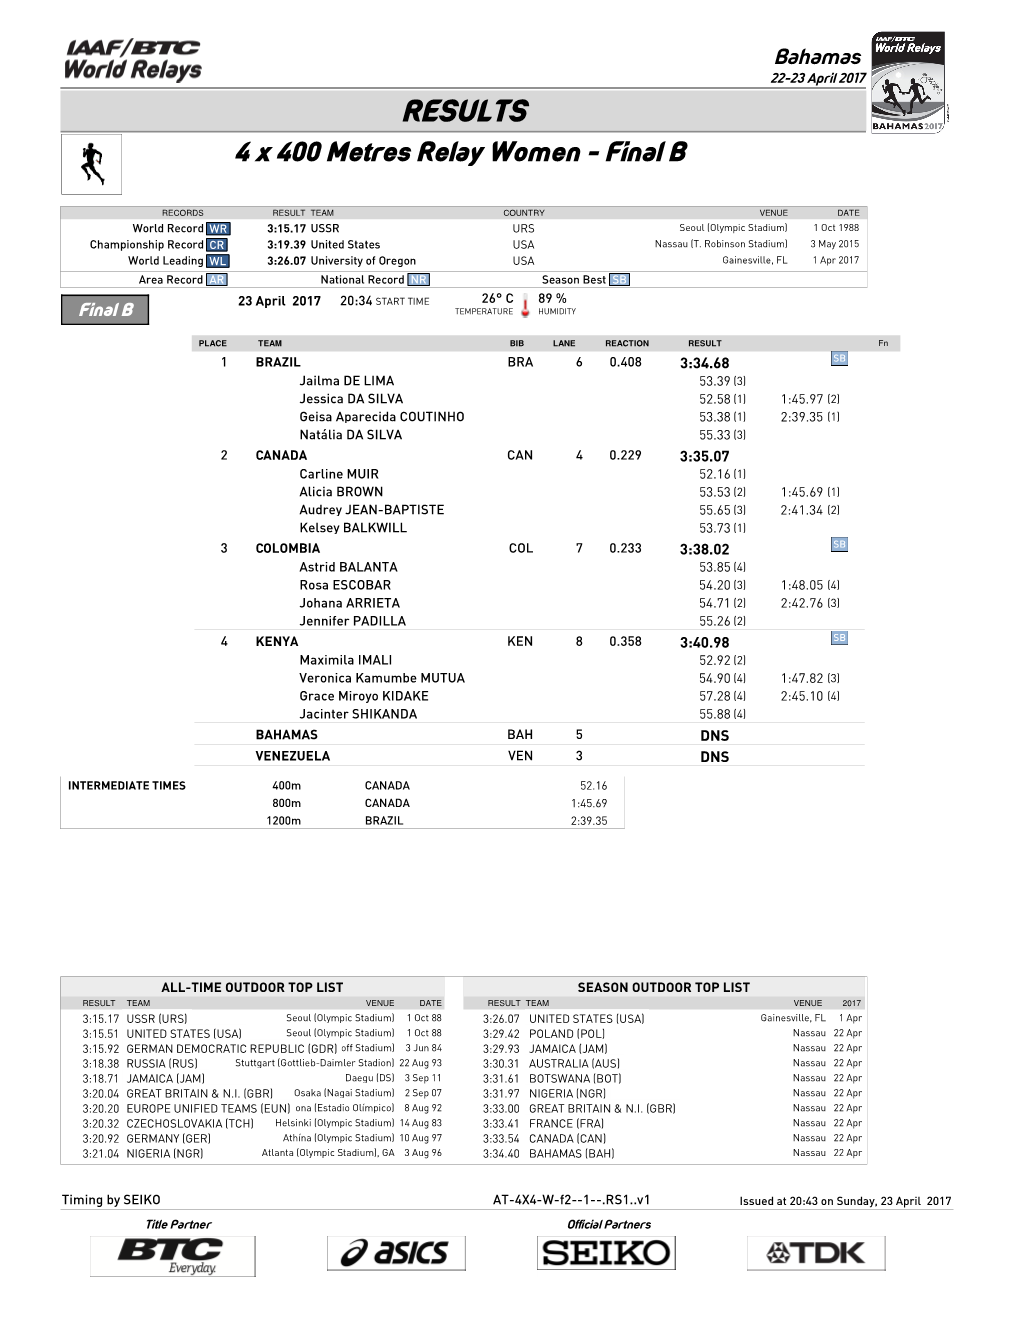 RESULTS 4 X 400 Metres Relay Women - Final B